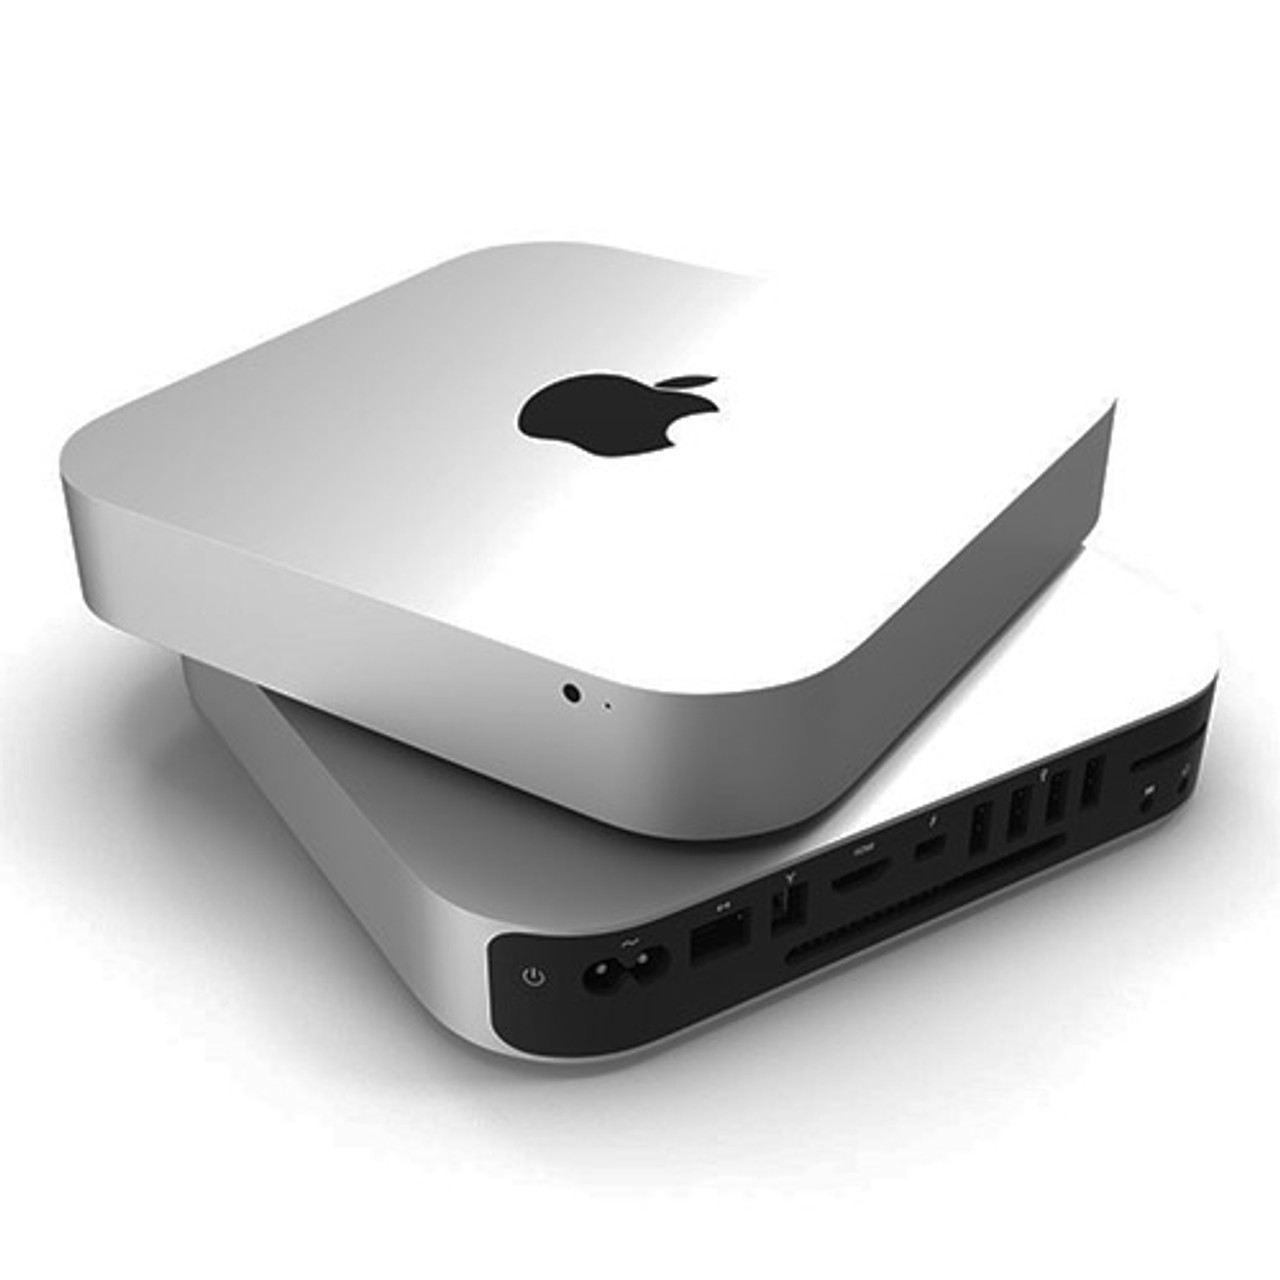 Apple Mac Mini Desktop Computer Core i5 8GB RAM 500GB Hard Drive with Mac OS High (2011 Model) and